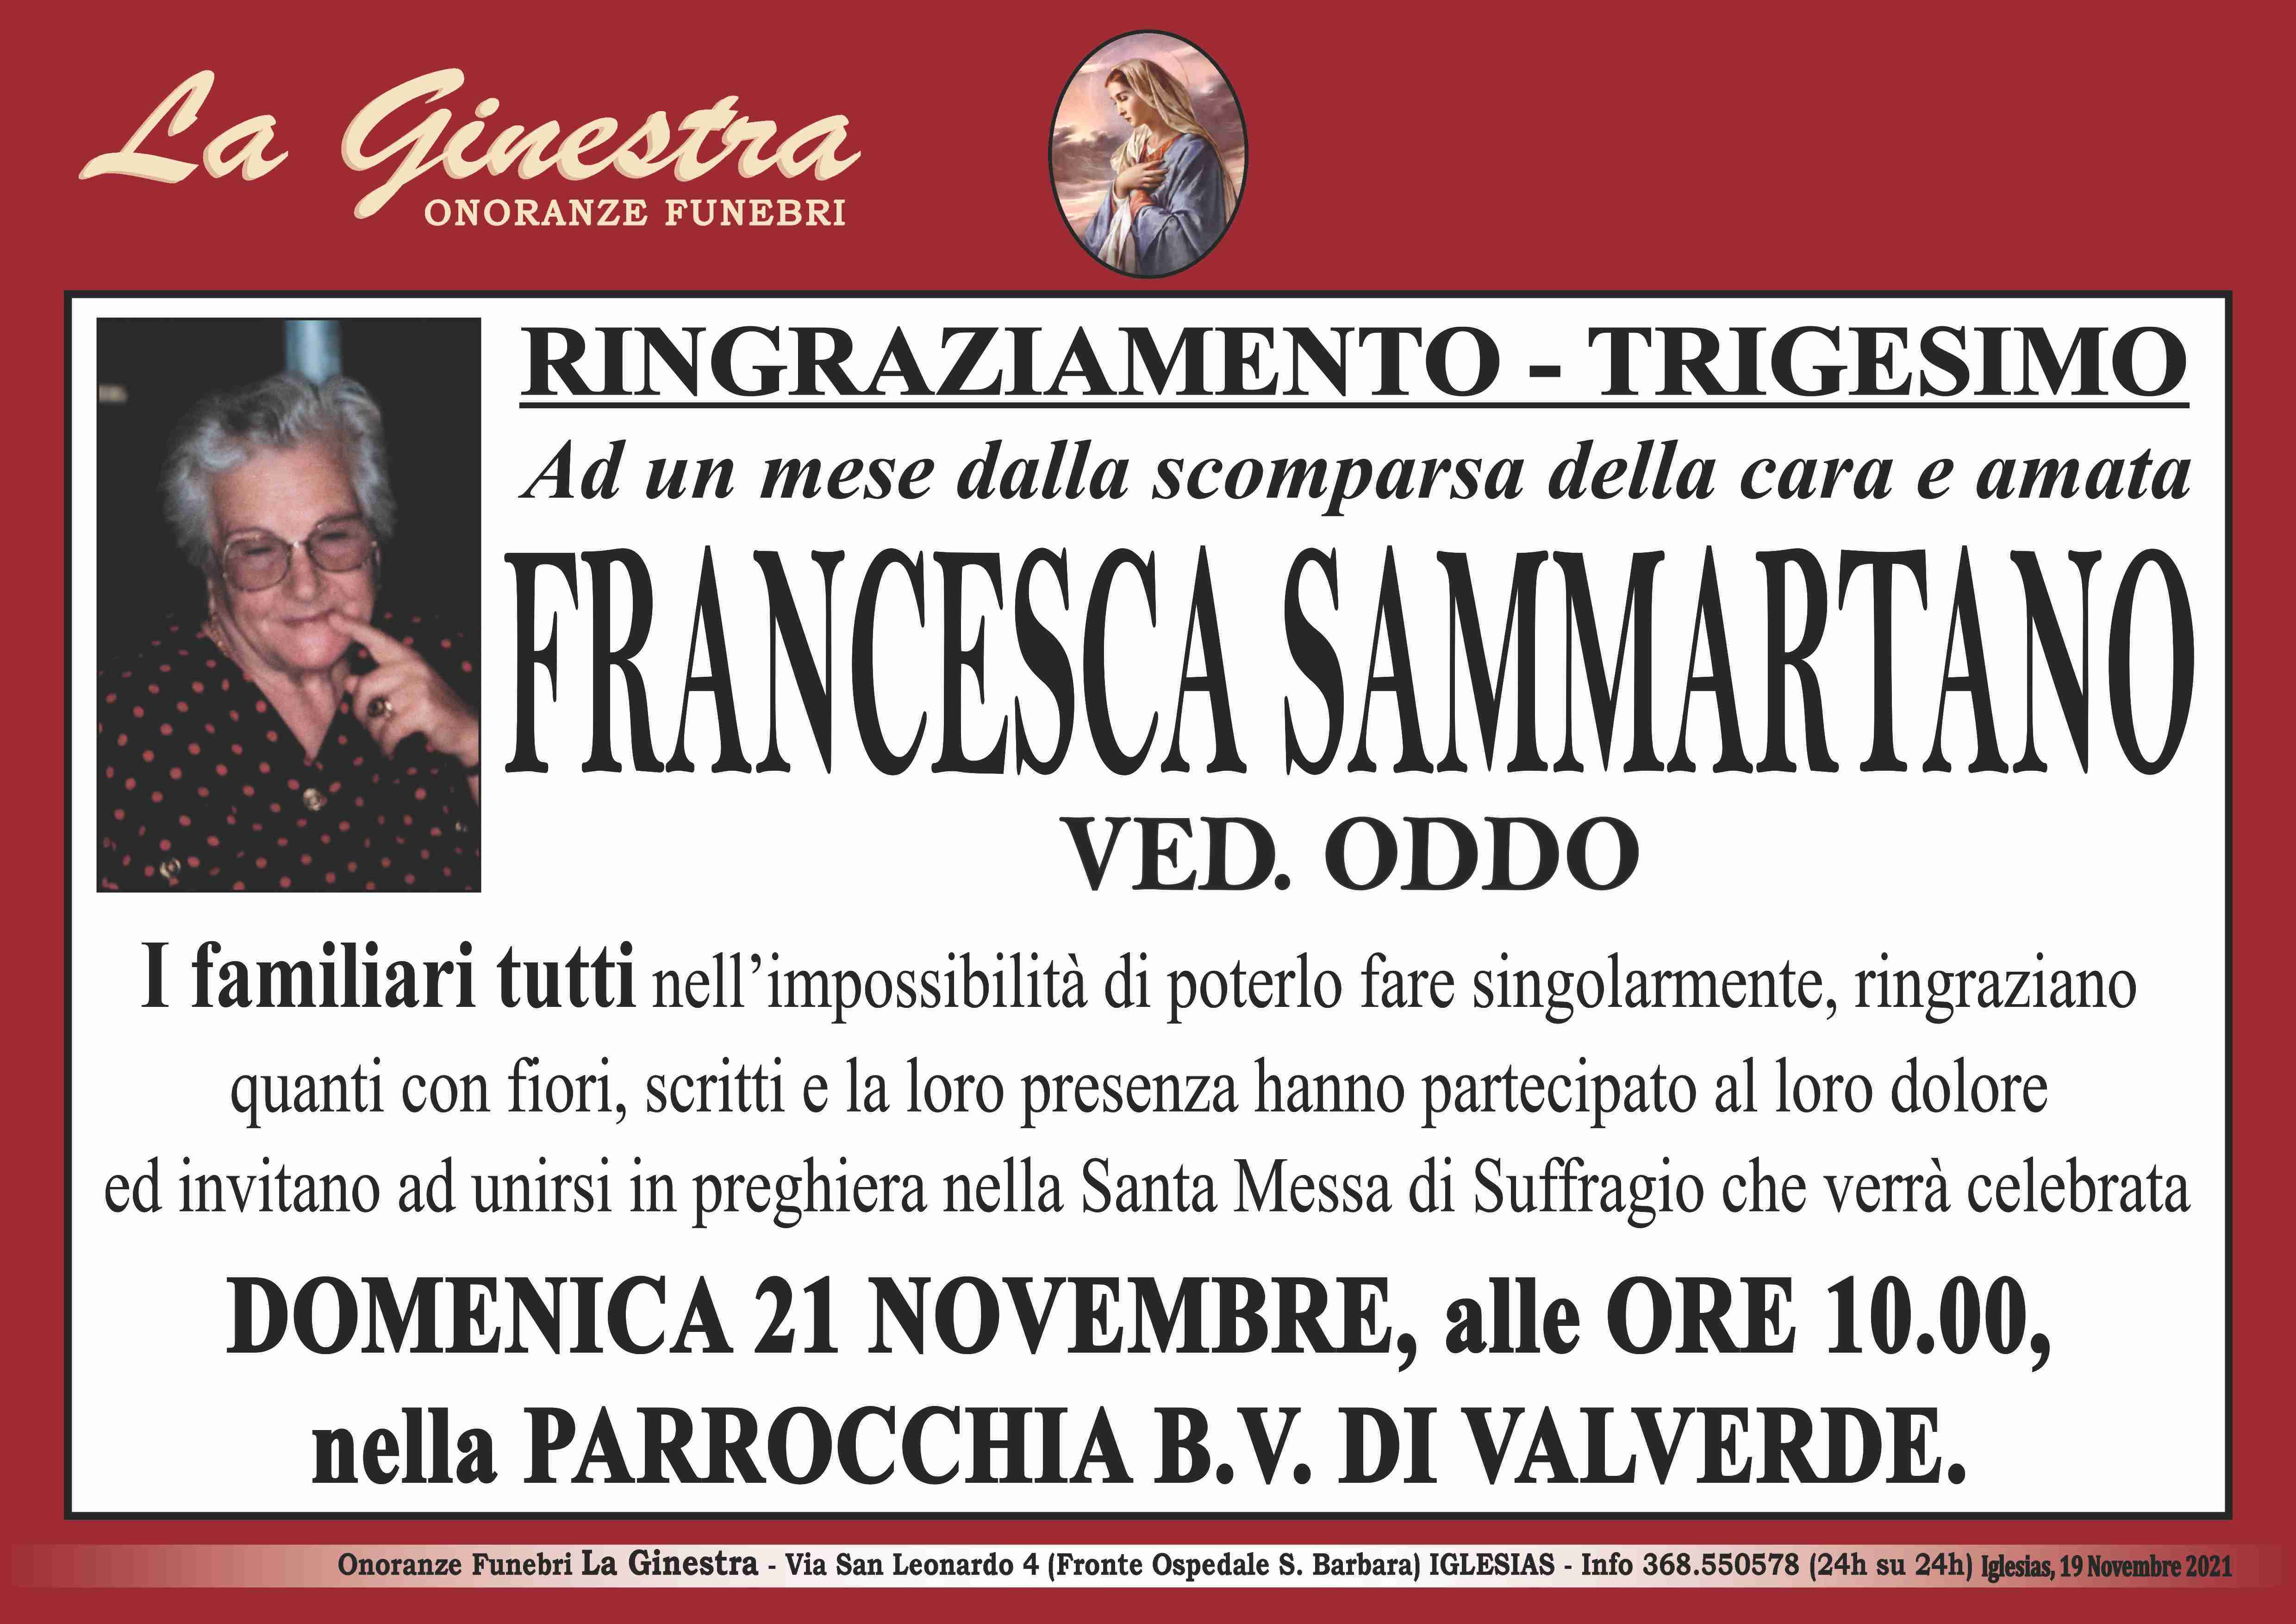 Francesca Sammartano